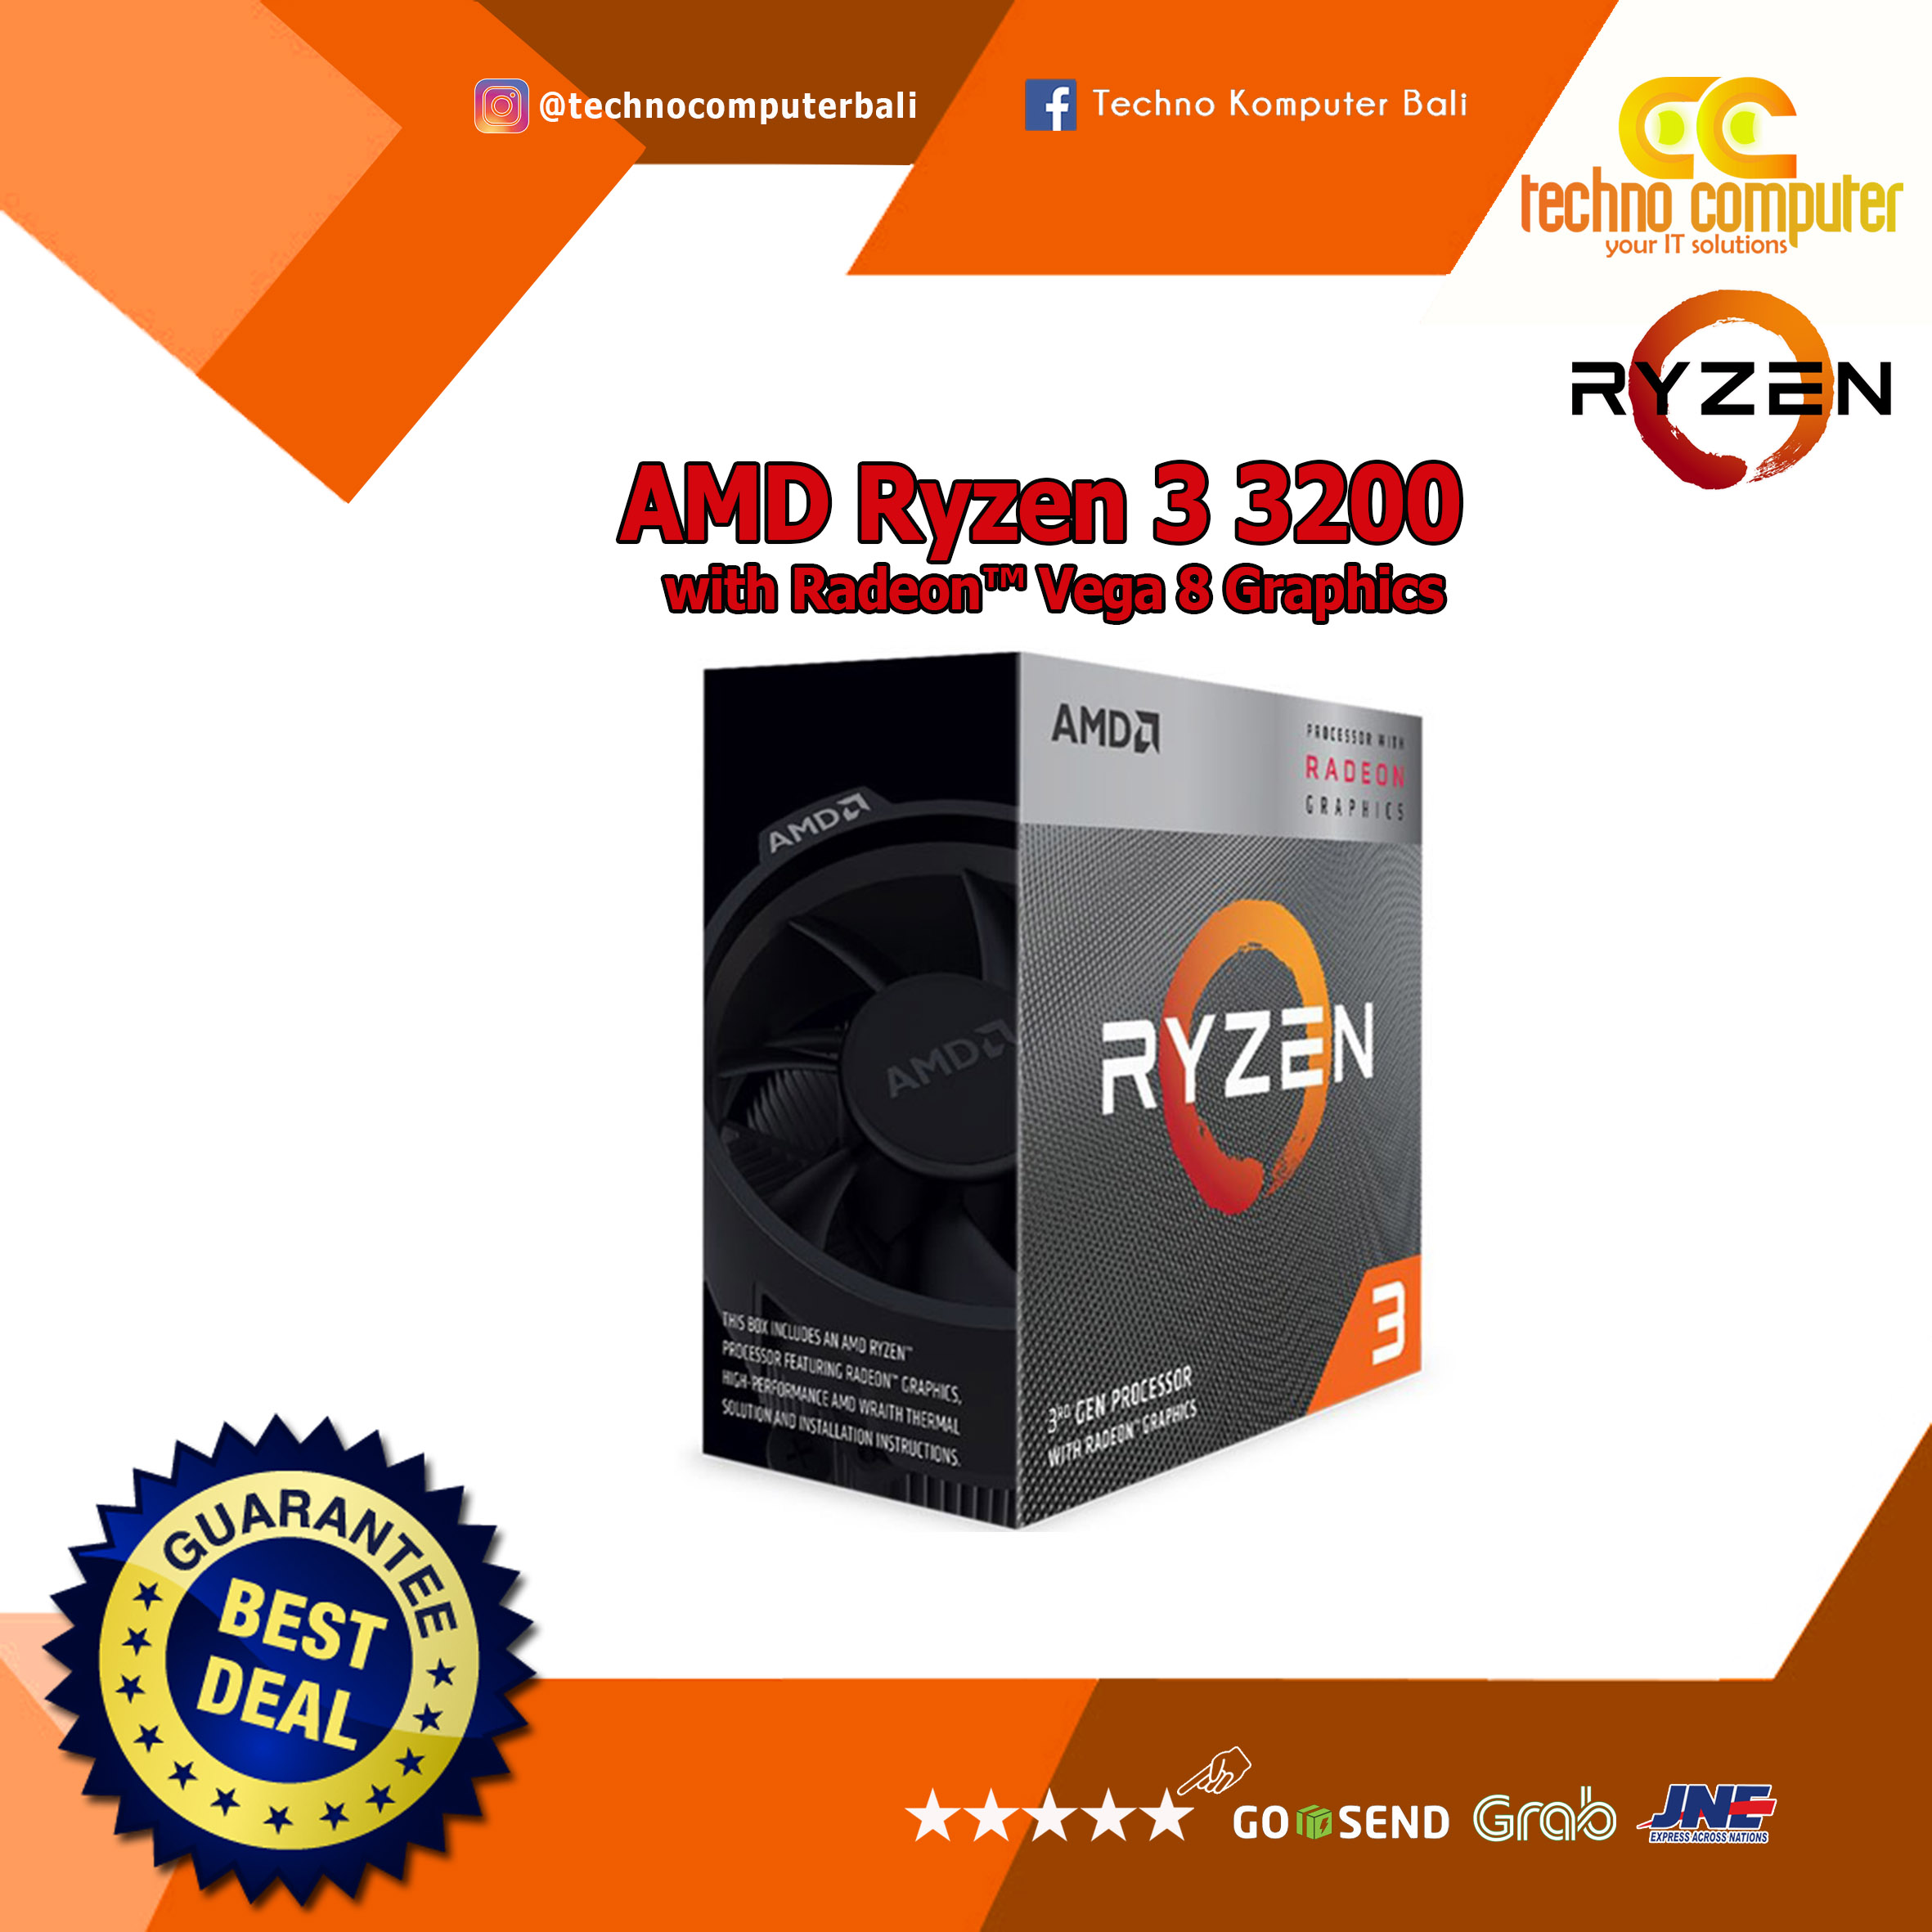 PROCESSOR AMD RYZEN 3 3200G - 4 Cores 4 Threads Up to 4.0GHz - Socket AM4